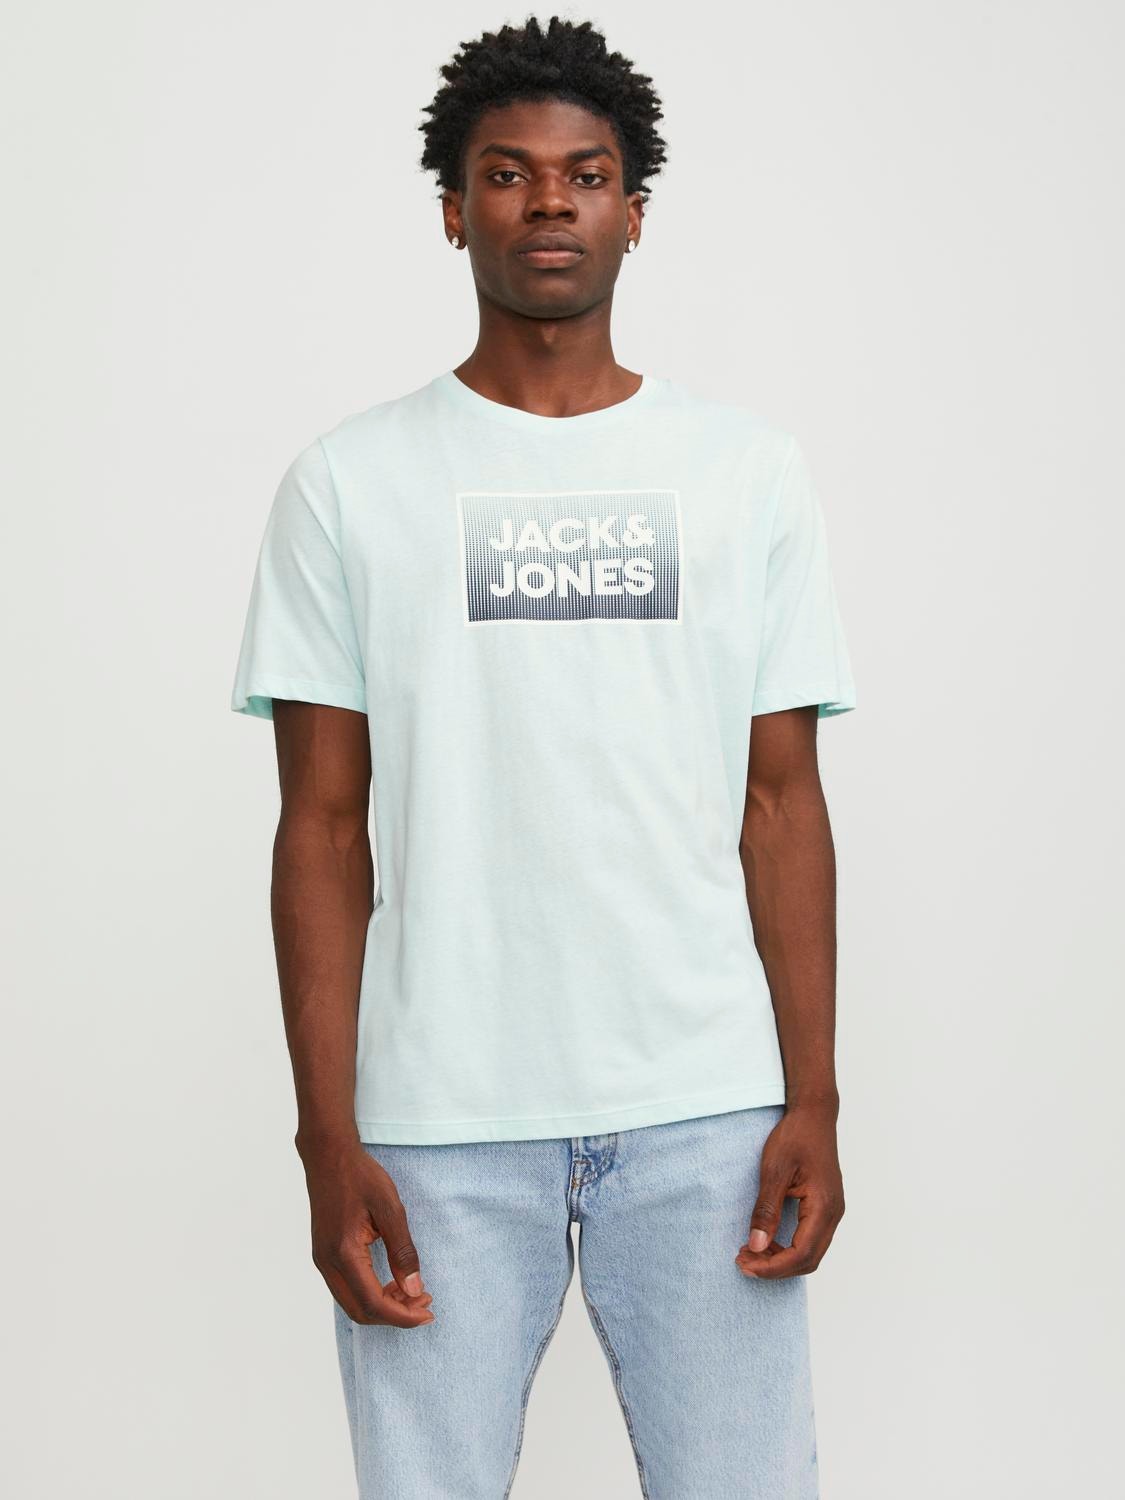 Jack & Jones T-shirt Con logo Girocollo -Soothing Sea - 12249331